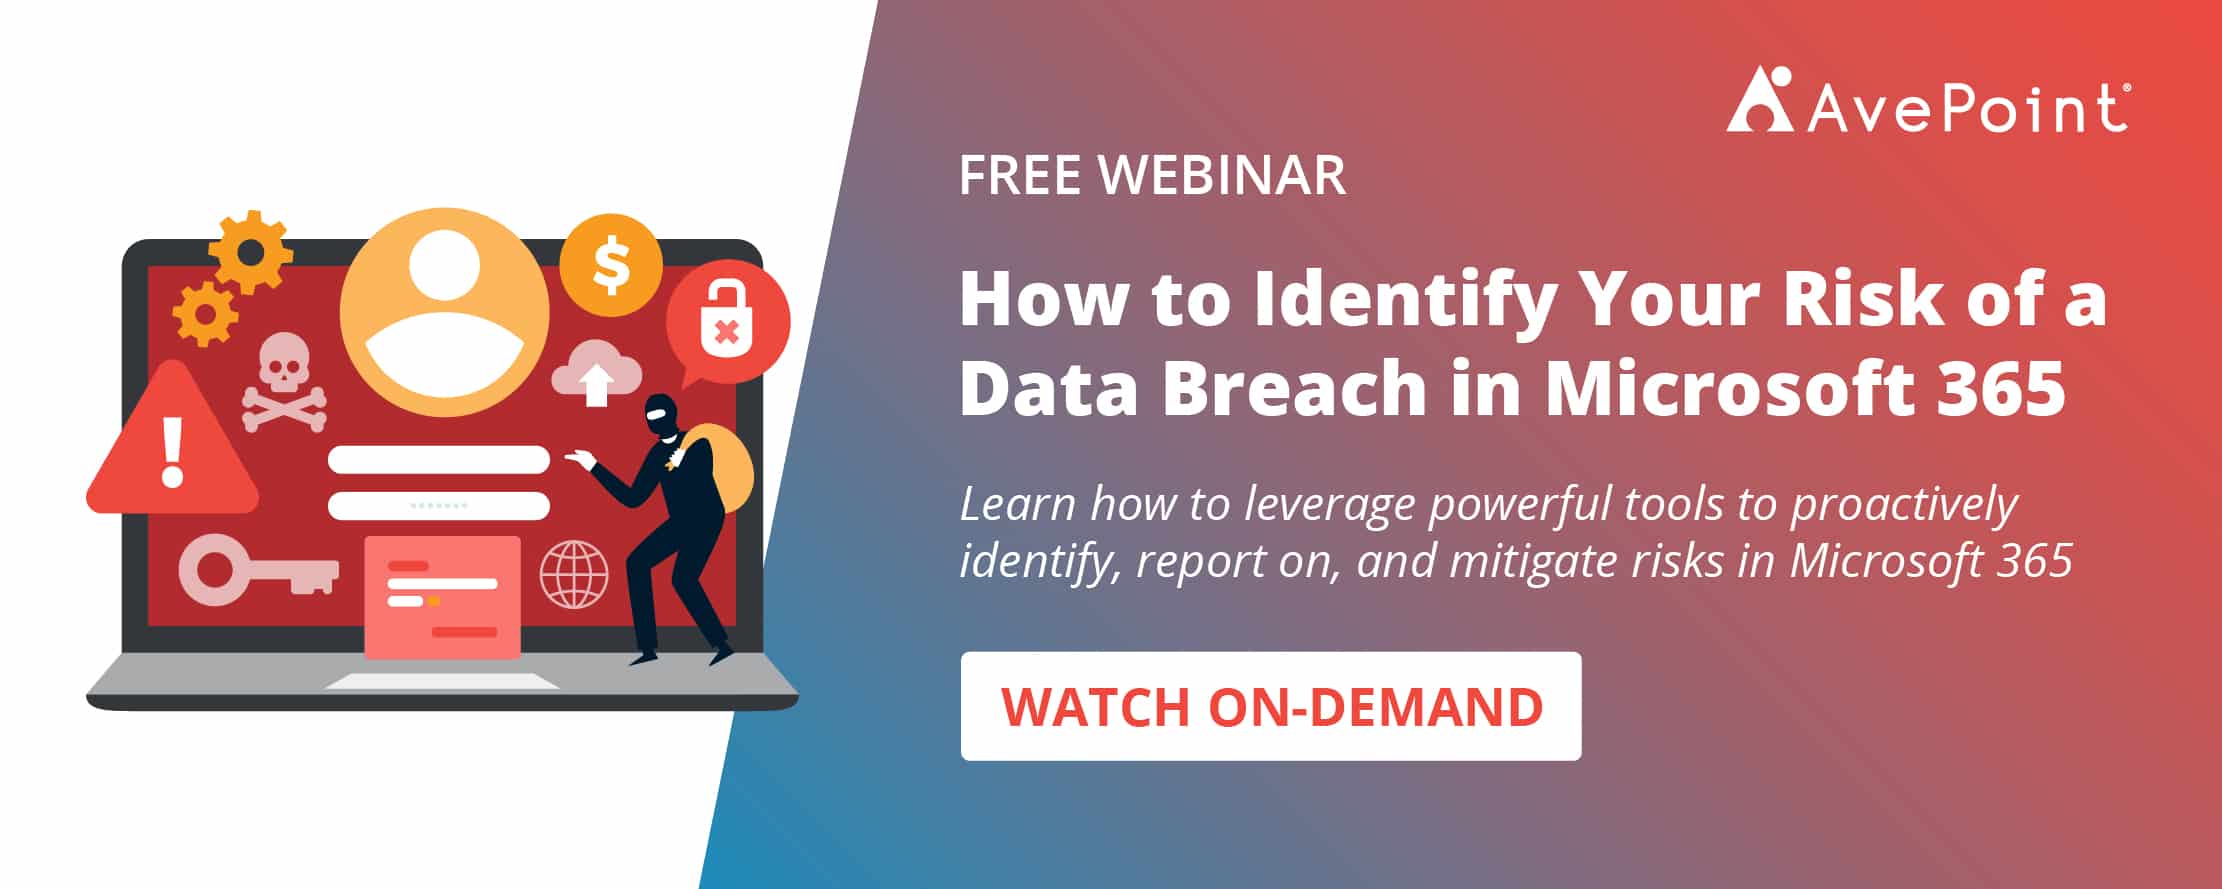 identify-data-breach-risk-m365-ebook